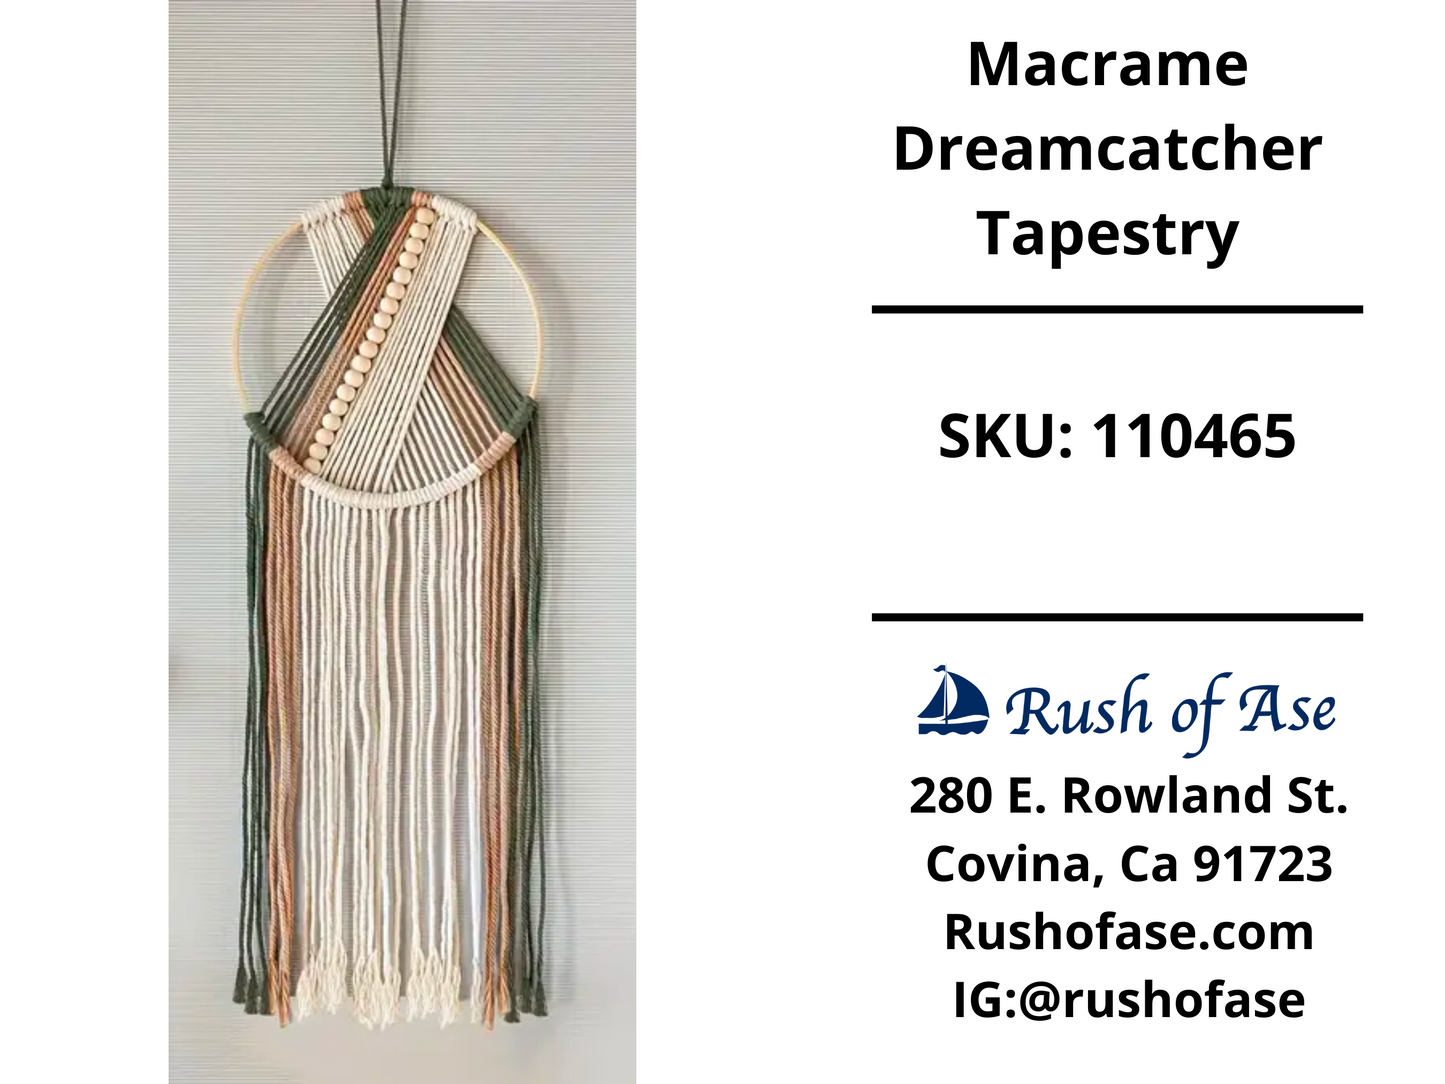 Macrame Dreamcatcher Tapestry